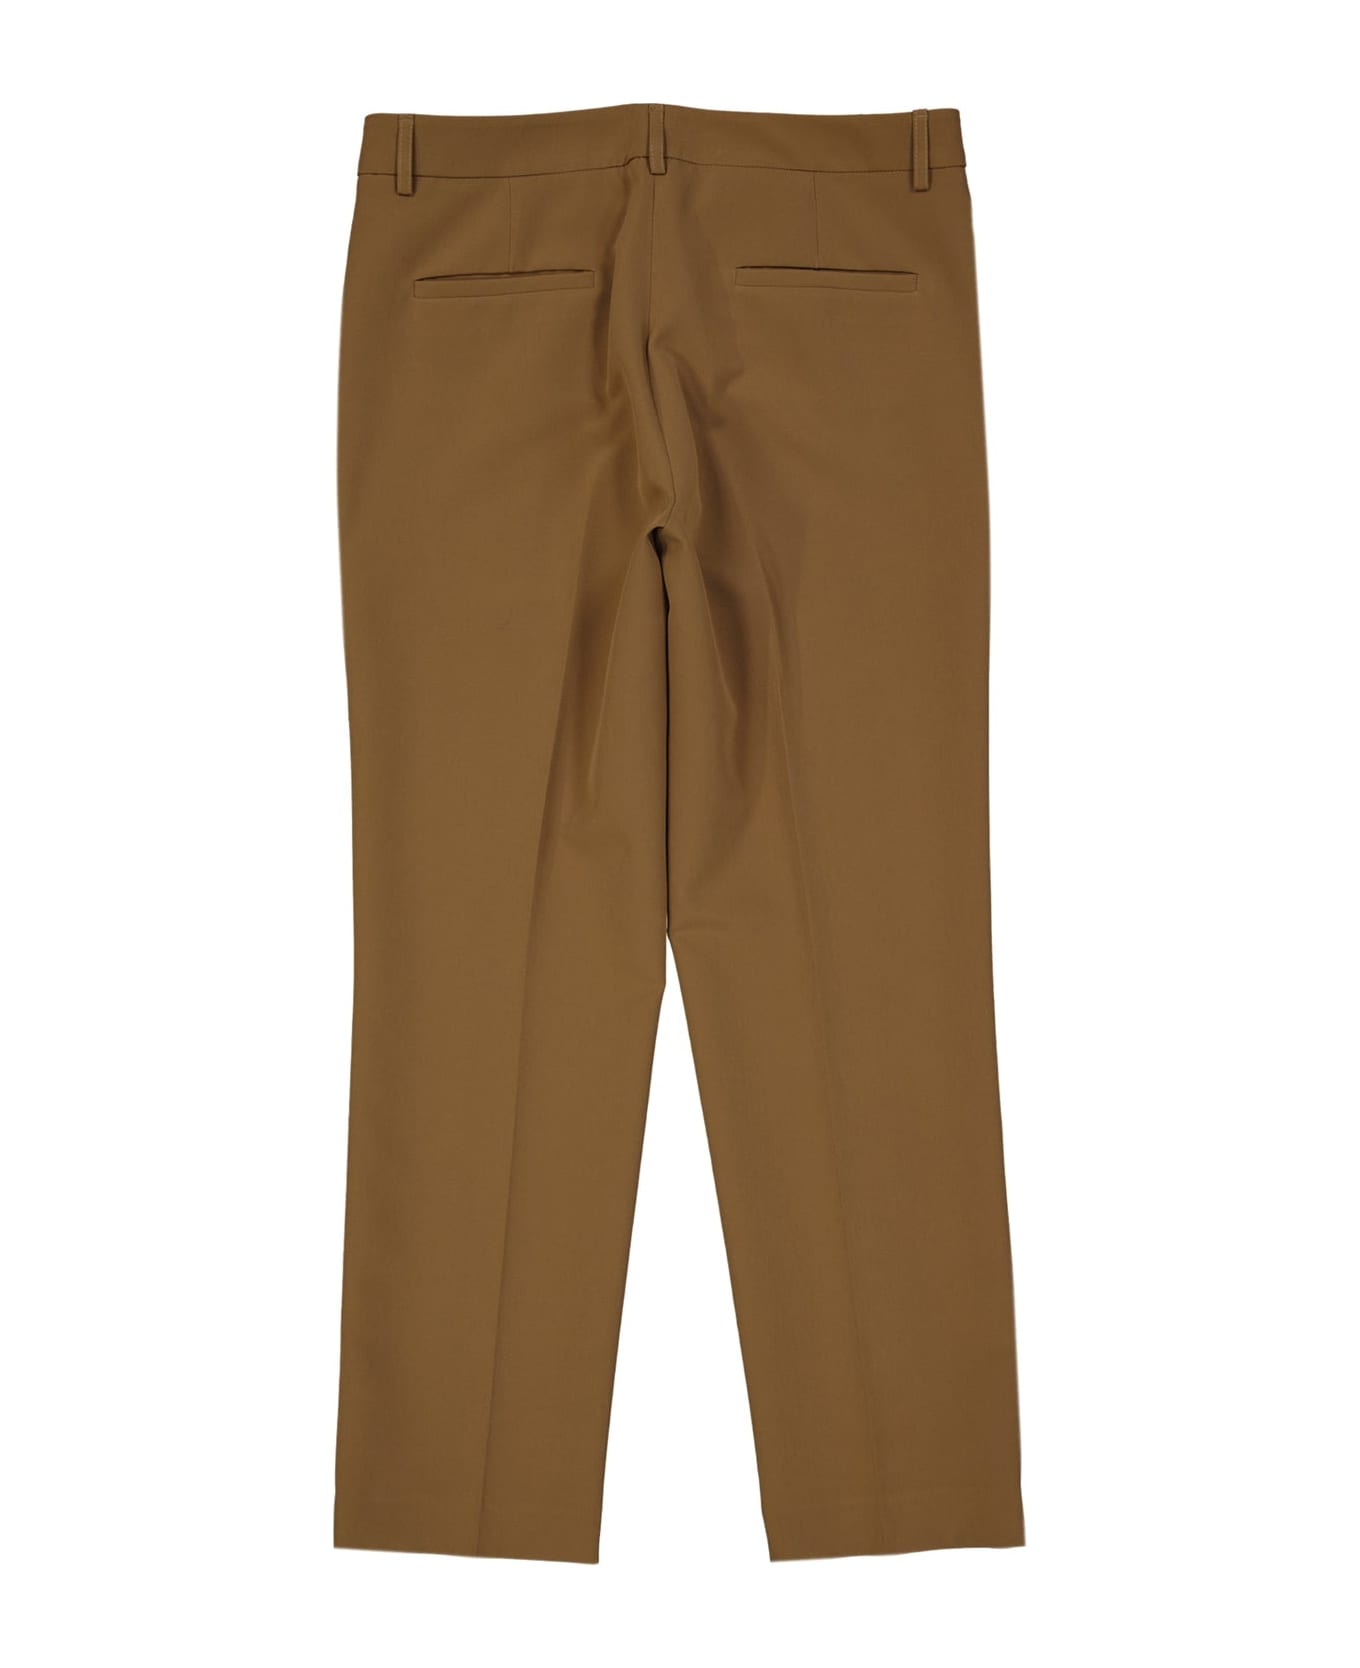 Blanca Vita Cropped Trousers - Brown